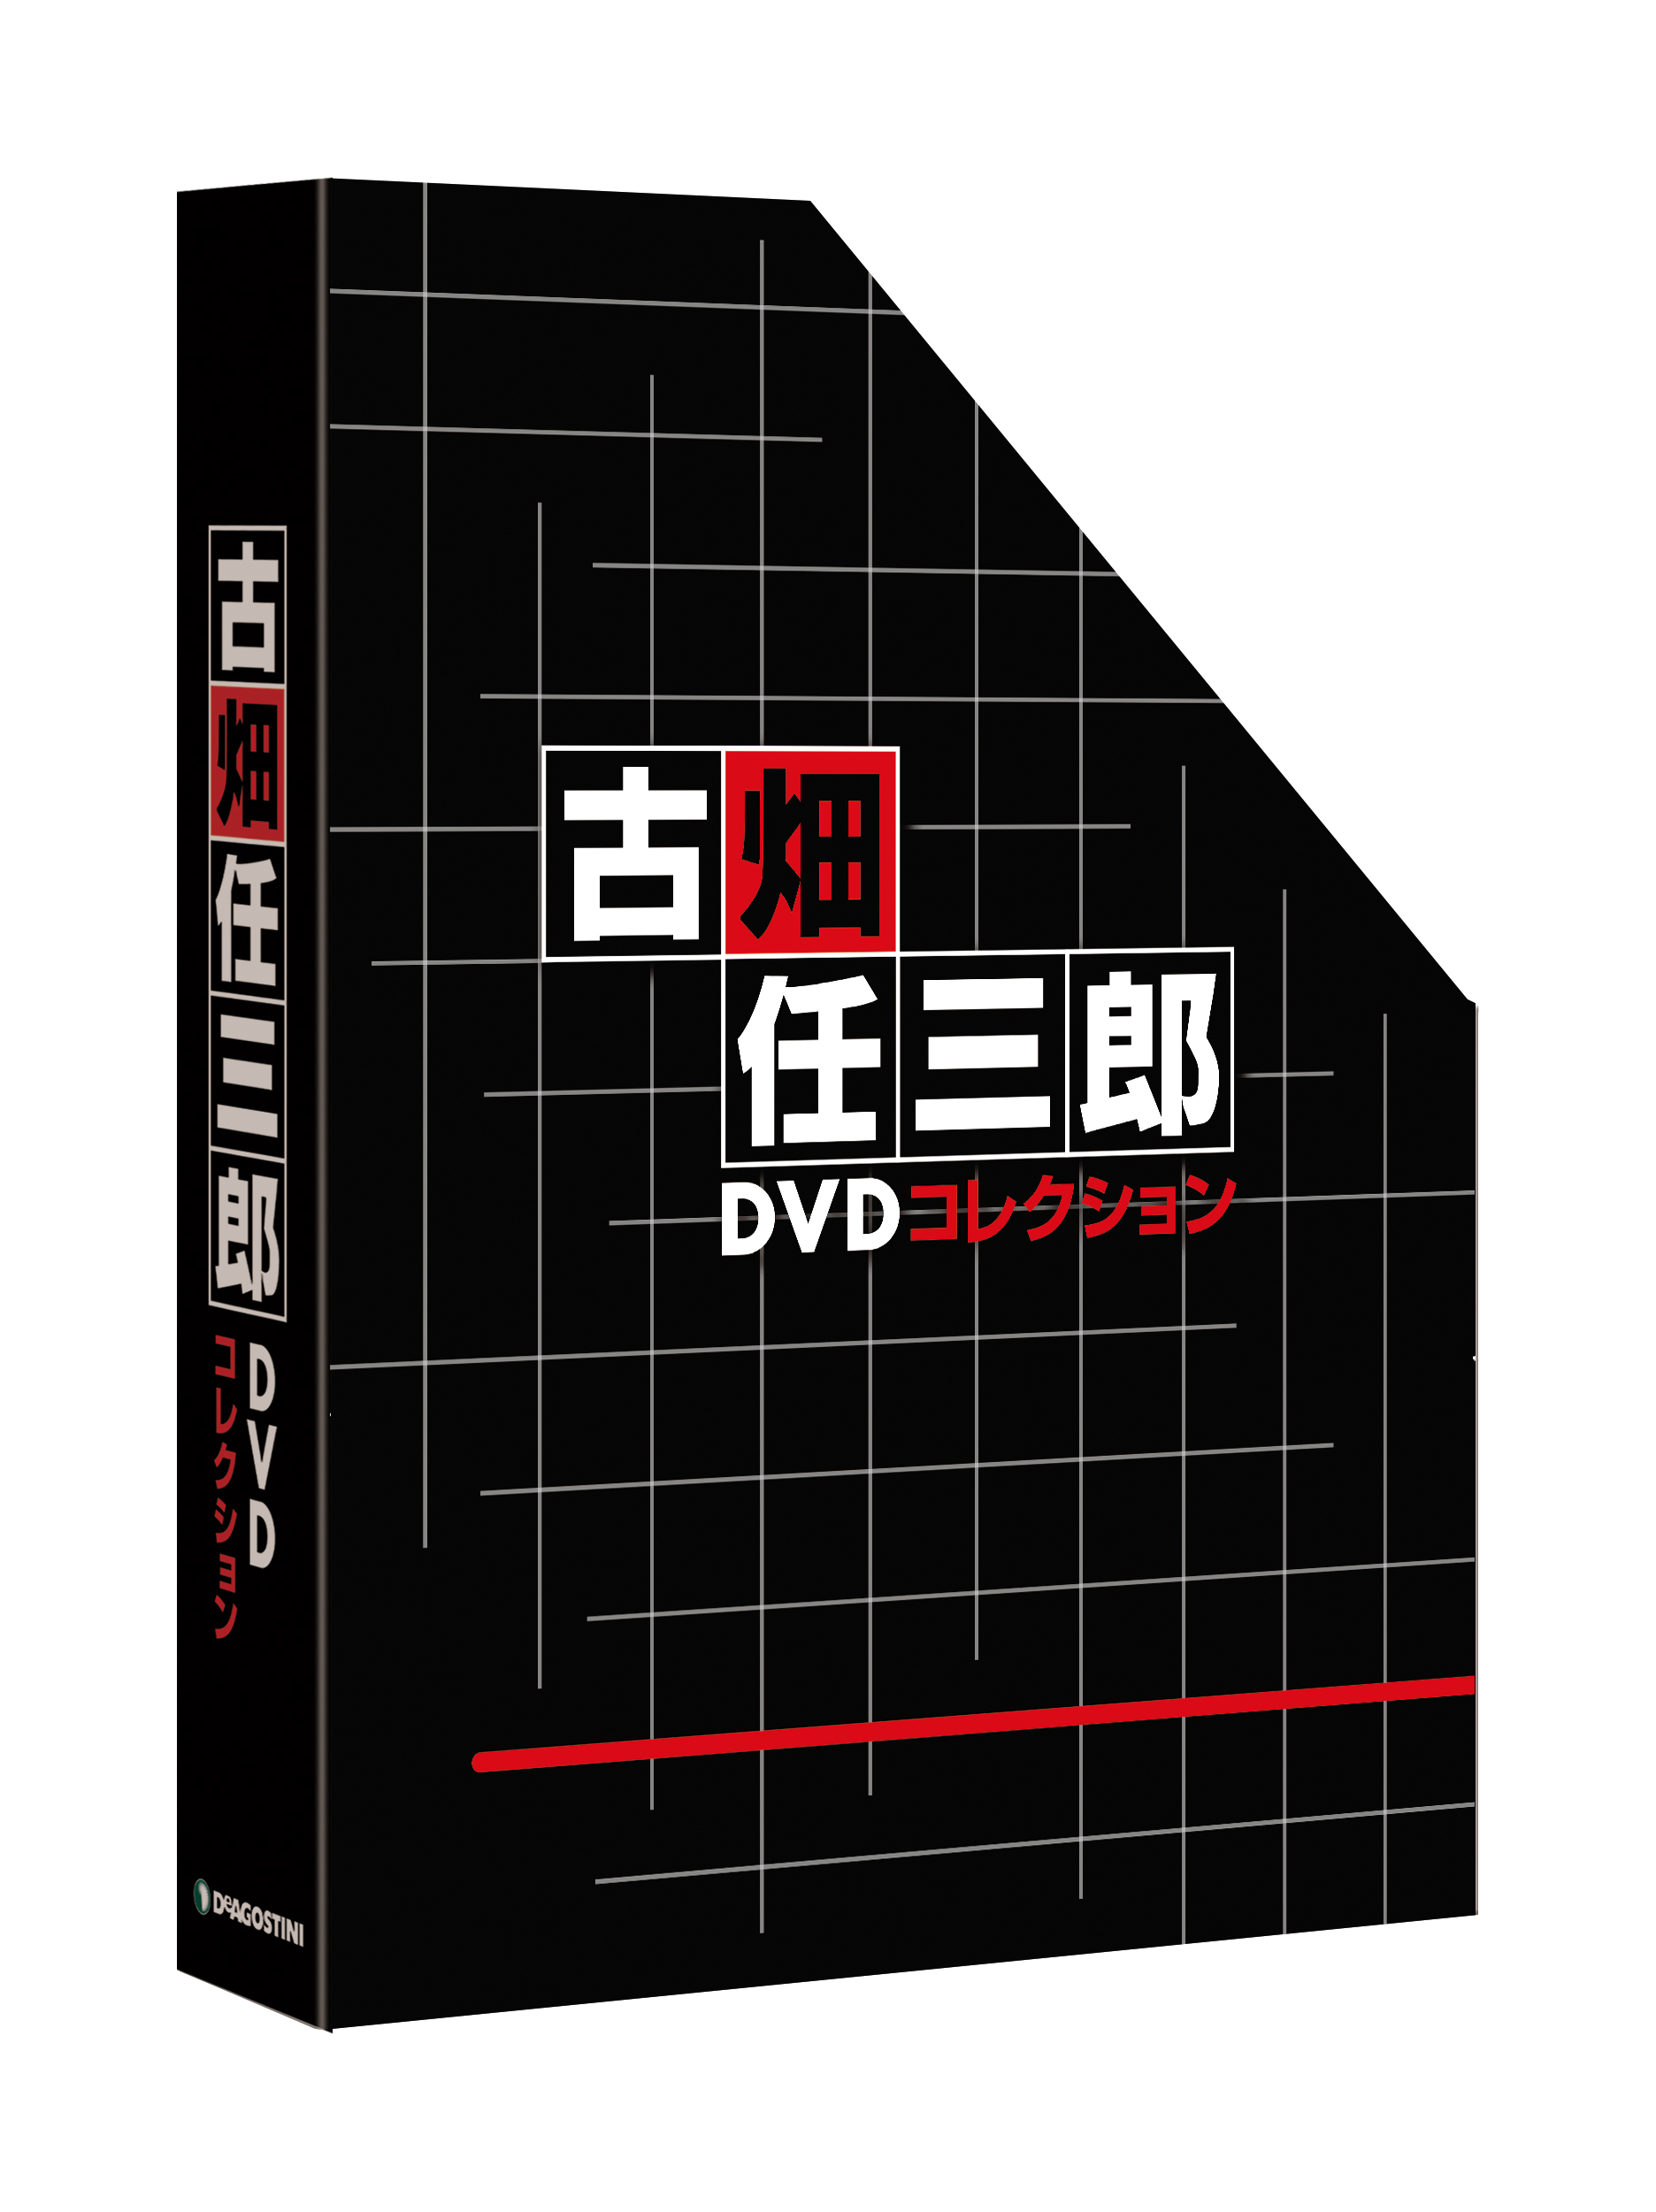 DVD付きマガジン『古畑任三郎 DVDコレクション』創刊決定 - amass